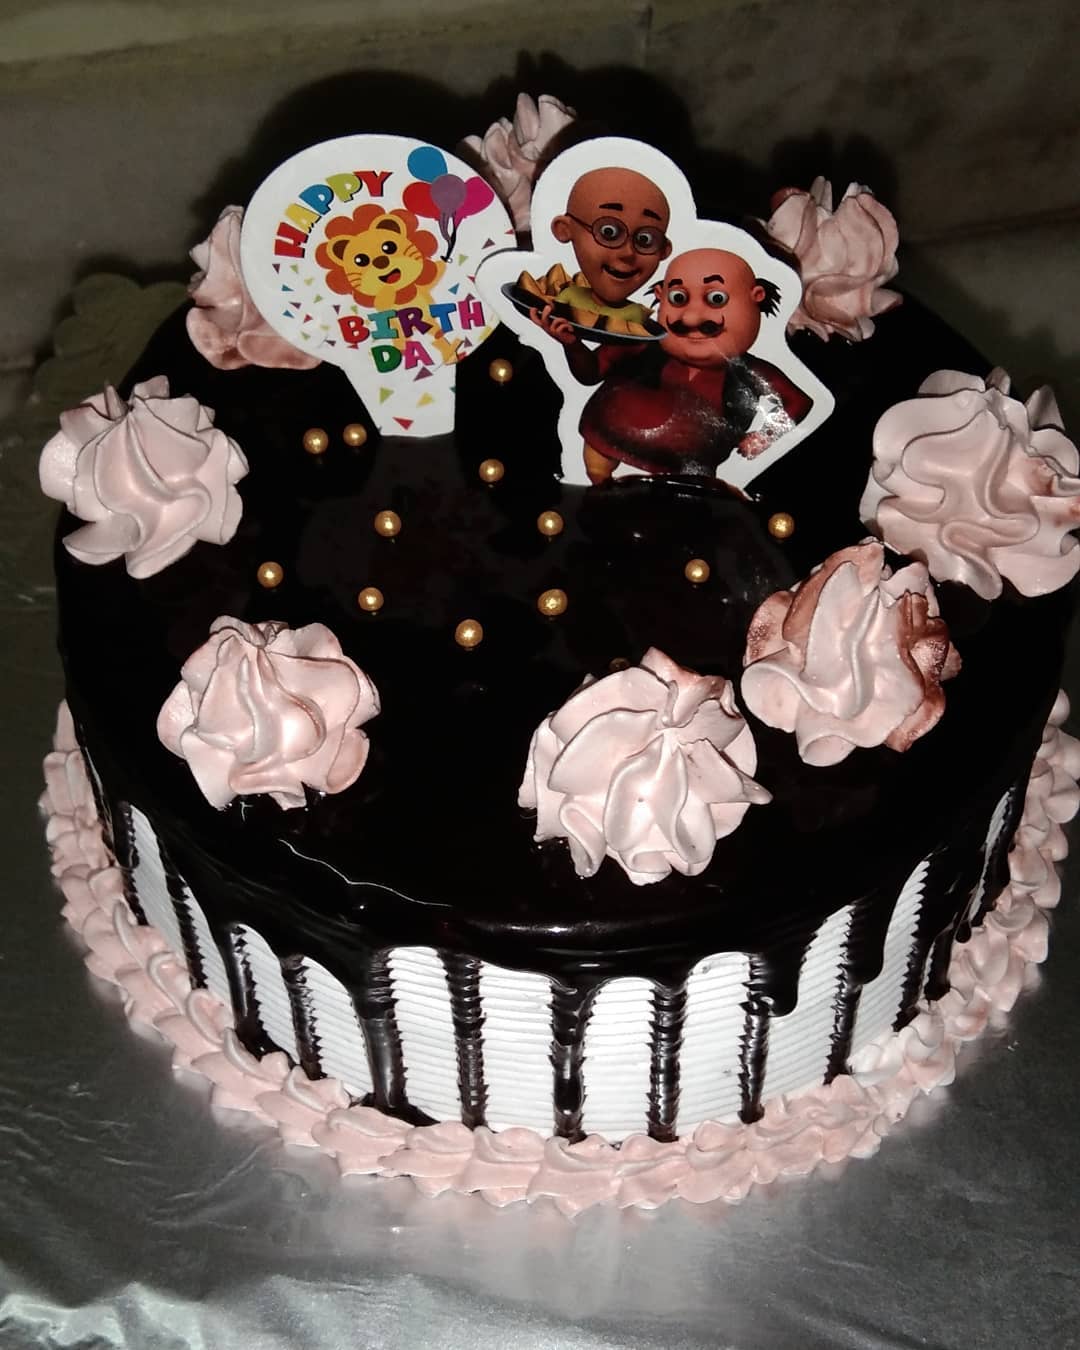 Cartoon Cakes | 1st Birthday Cake | Cake for Kids Birthday | GiftzBag